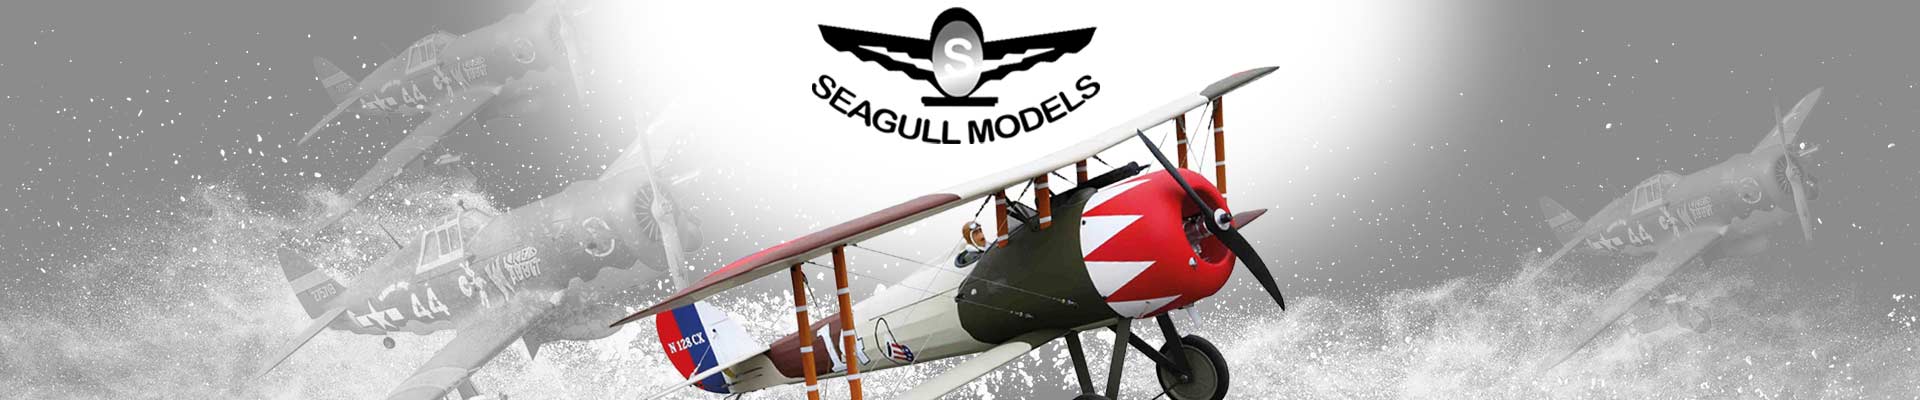 Seagull_1920x_X-Kopie